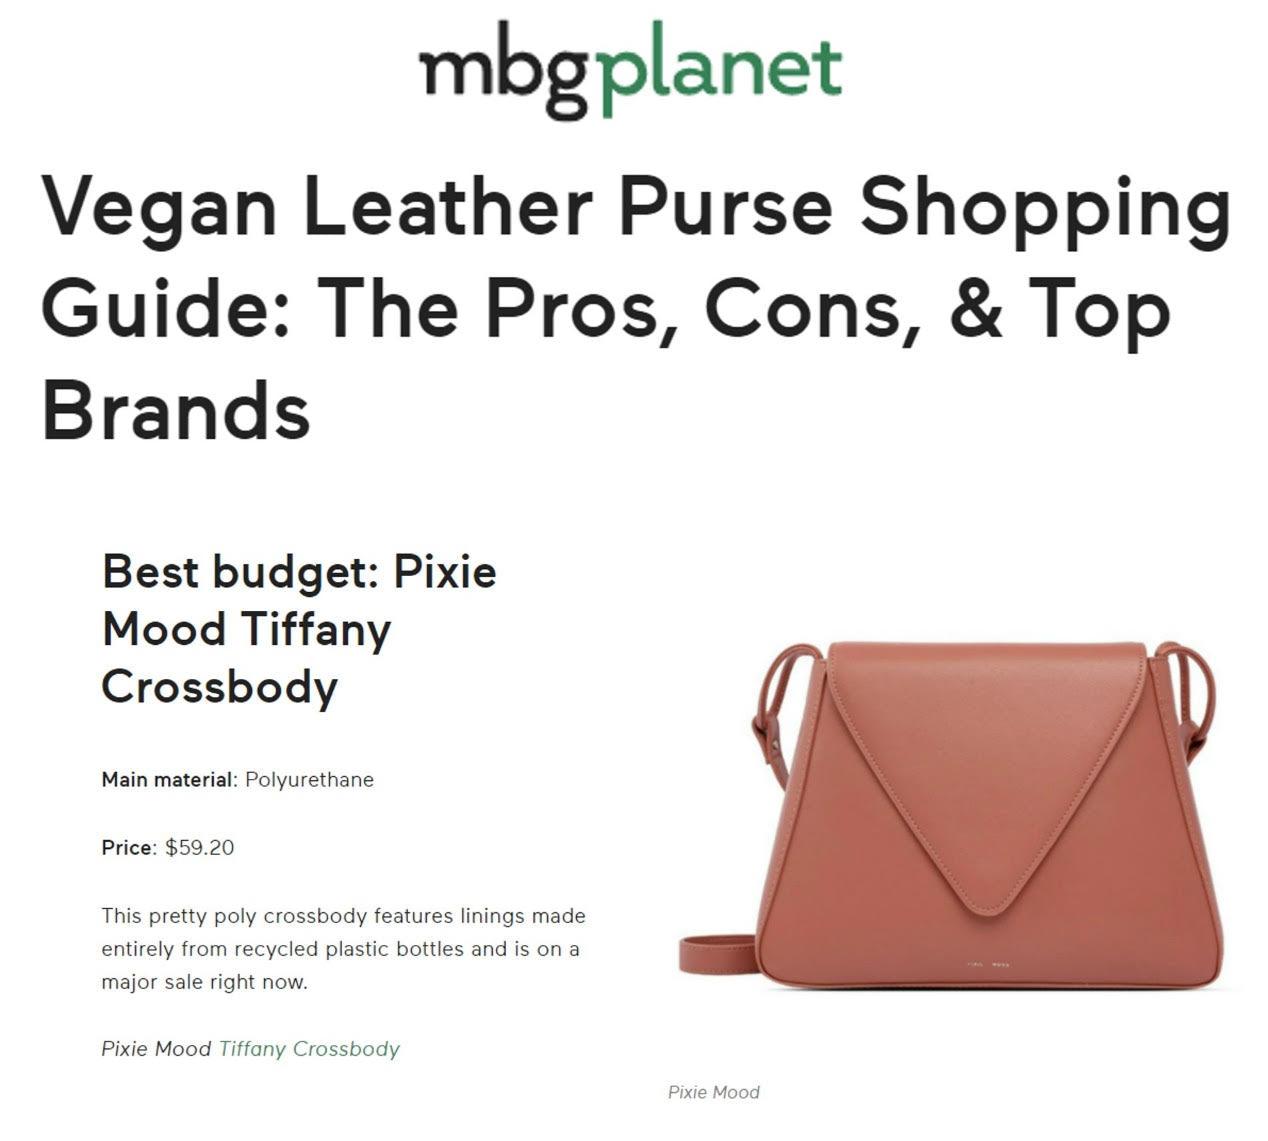 mindbodygreen: Vegan Leather Purse Shopping Guide - Pixie Mood Vegan Leather Bags